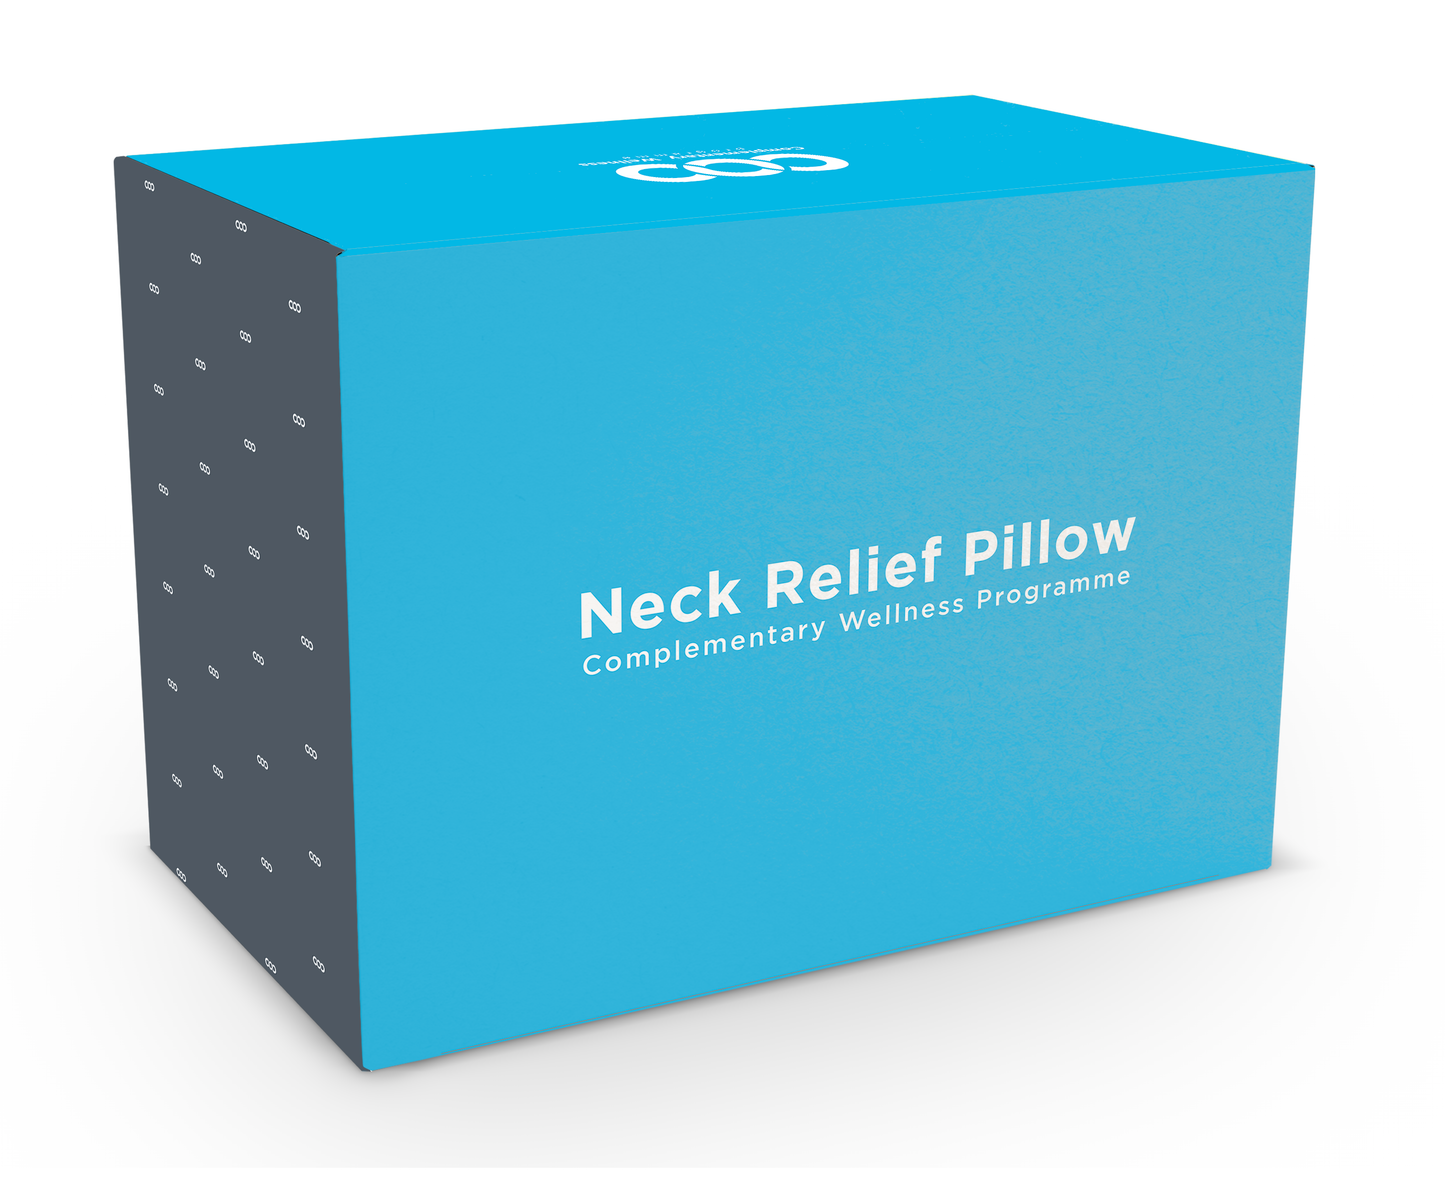 Neck Relief Pillow